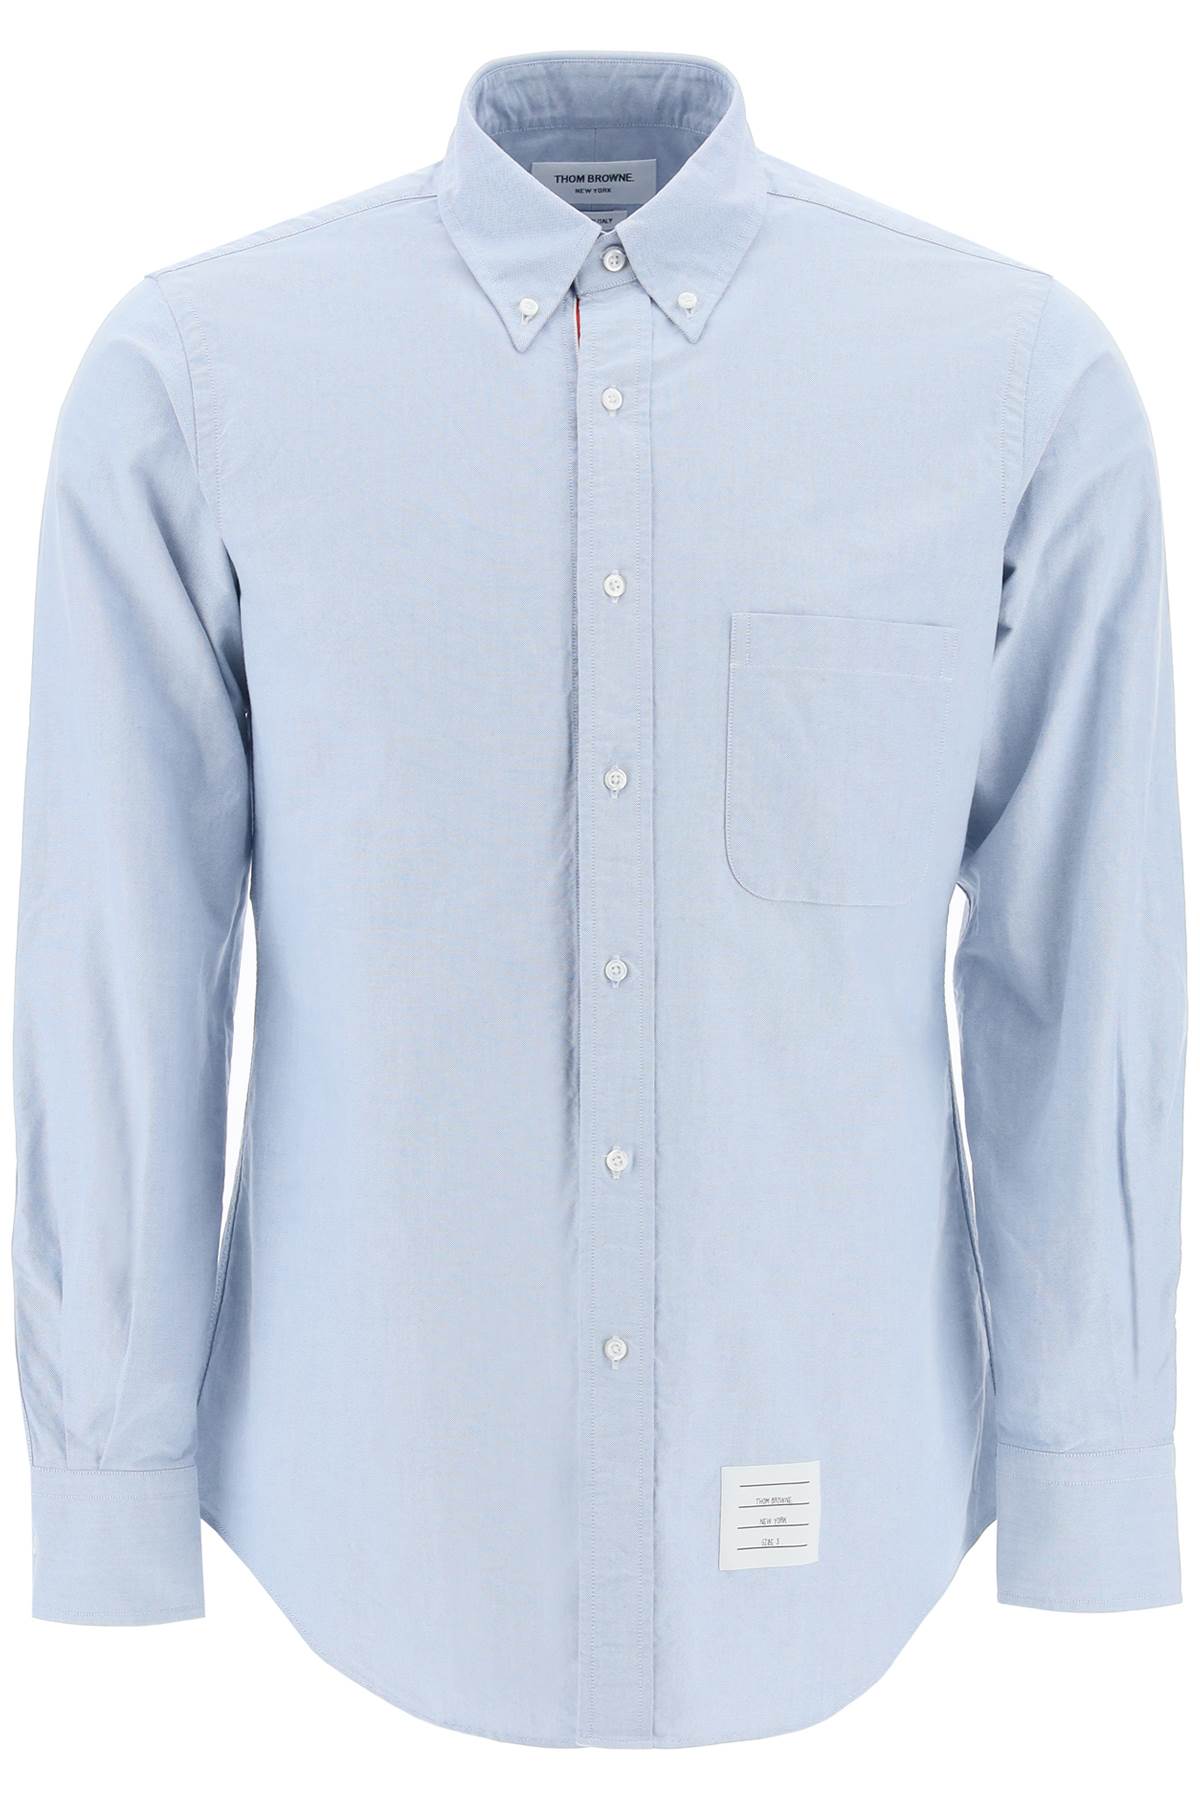 Thom Browne THOM BROWNE oxford cotton button-down shirt